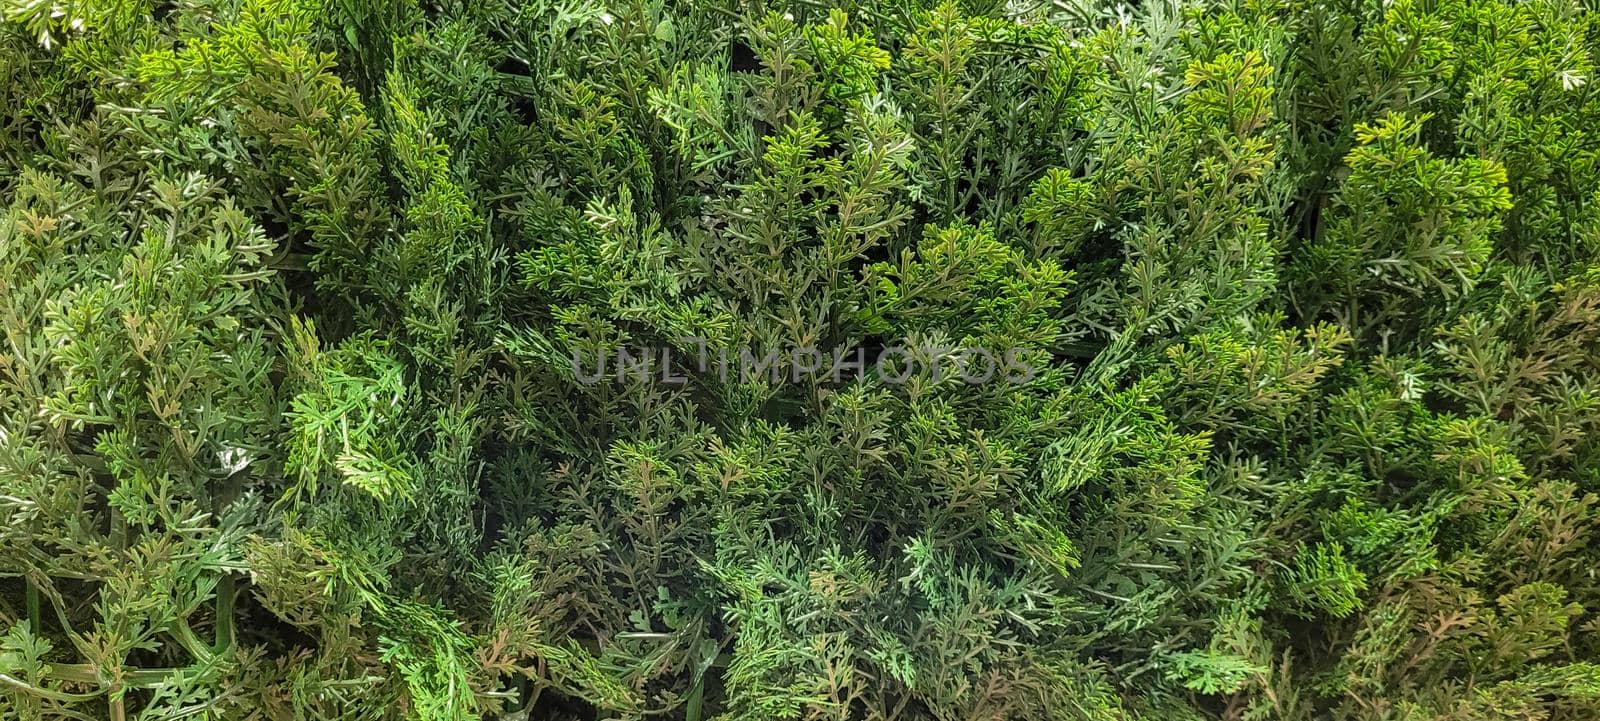 green foliage and native vegetation of brazil